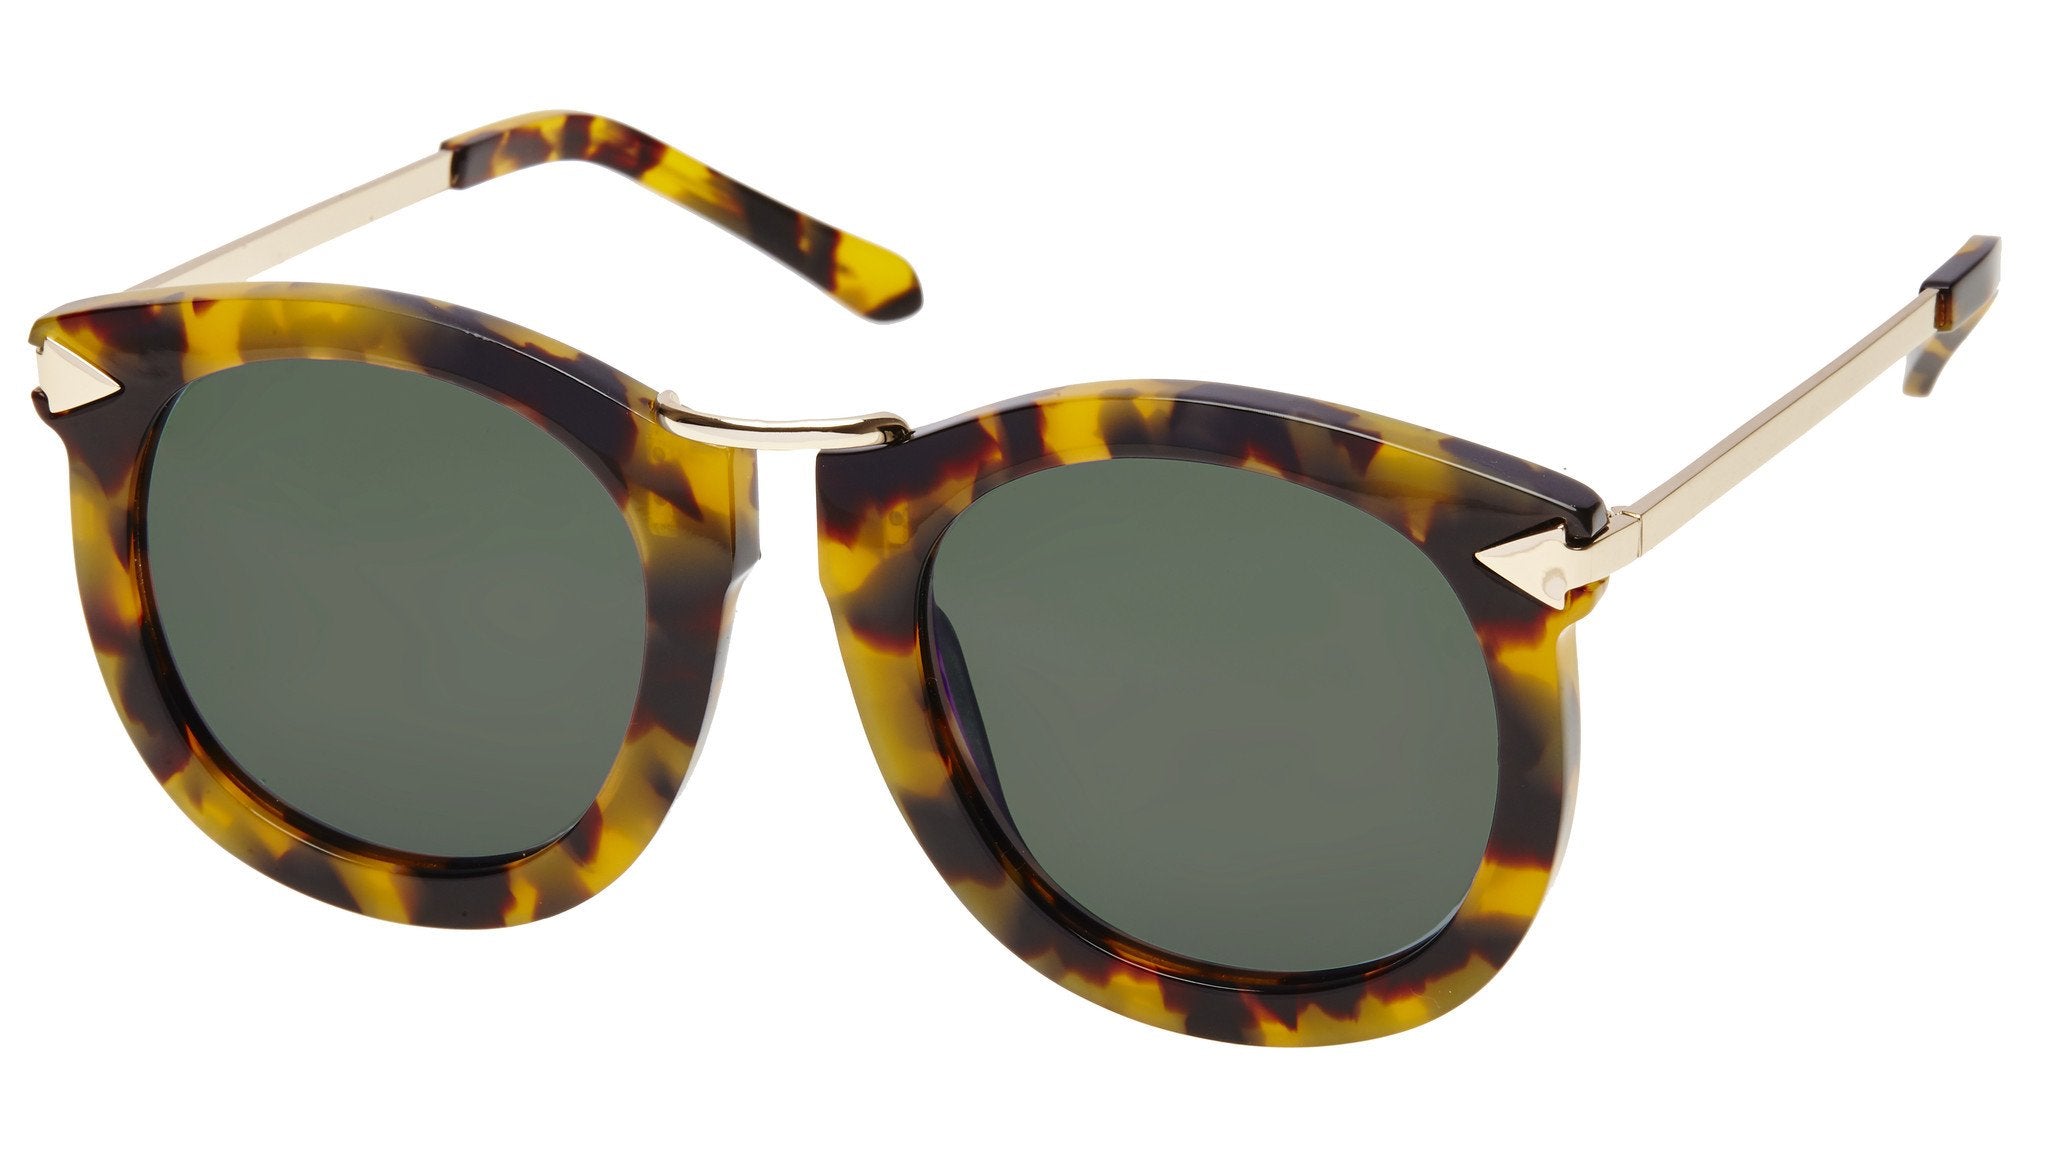 Karen Walker Hollywood Pool Sunglasses - Tortoise / Black | Karen walker  sunglasses, Karen walker, Sunglasses